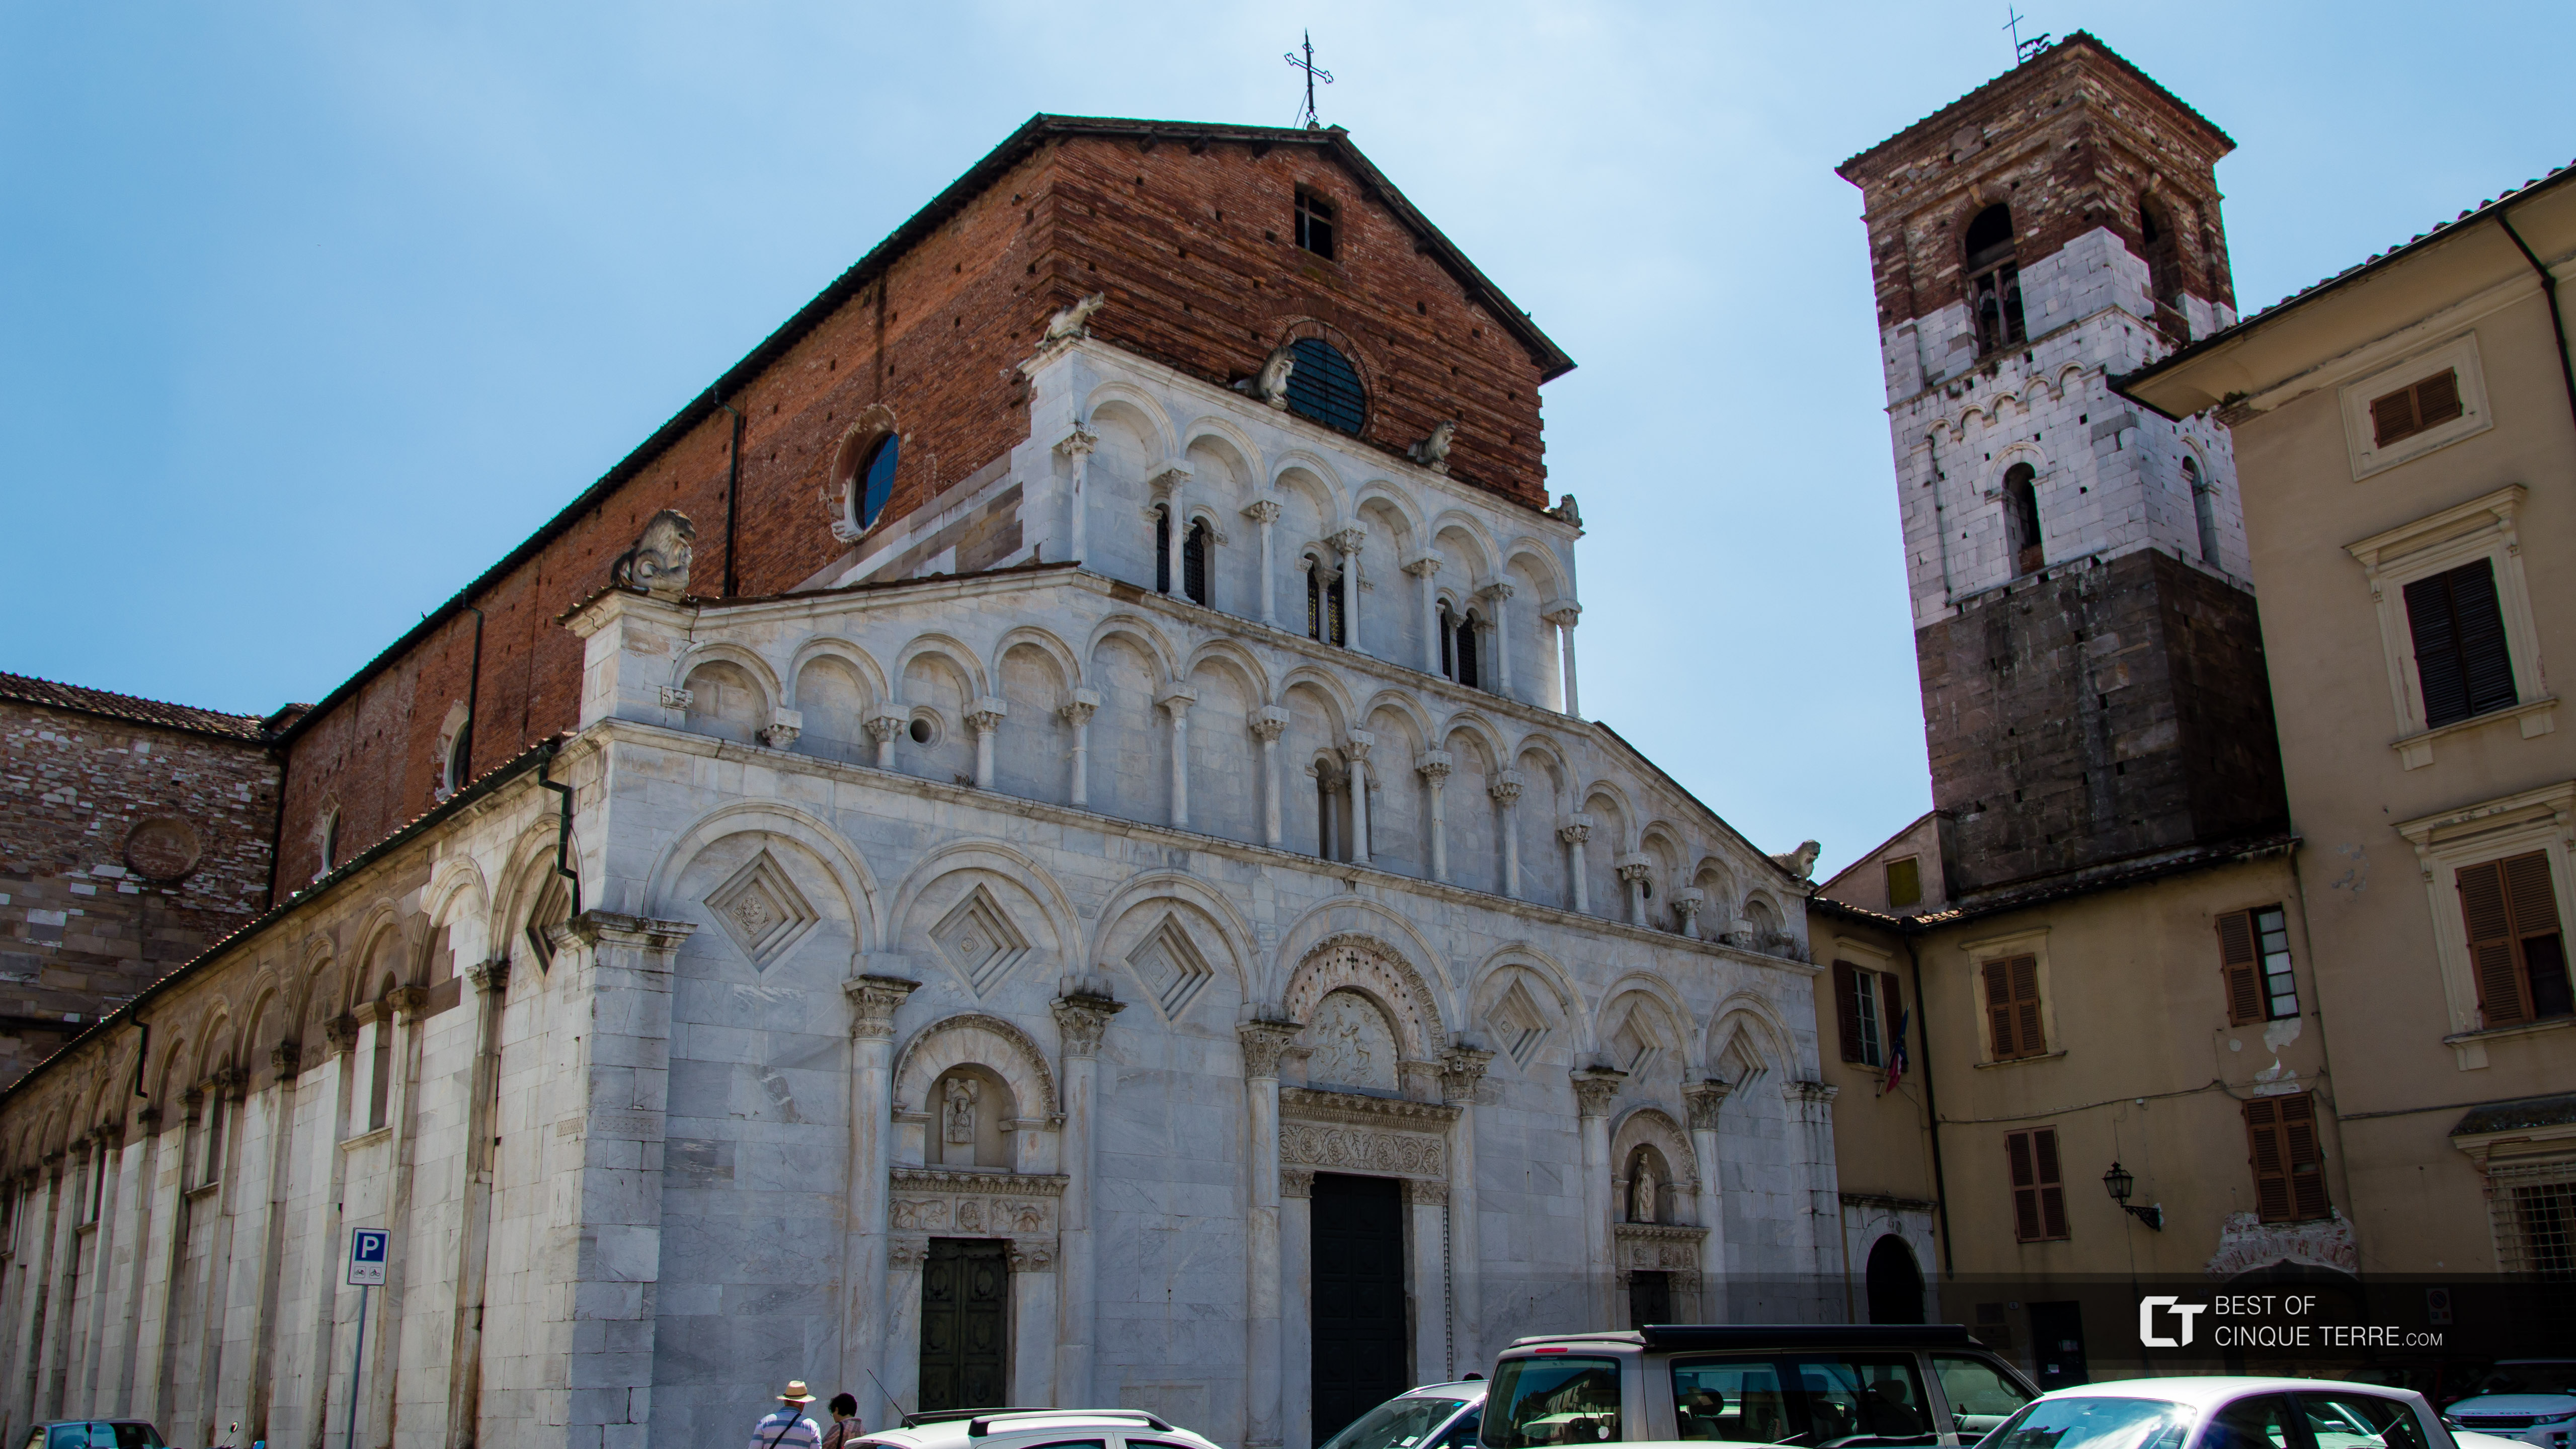 Kościół Santa Maria Forisportam, Lukka, Włochy